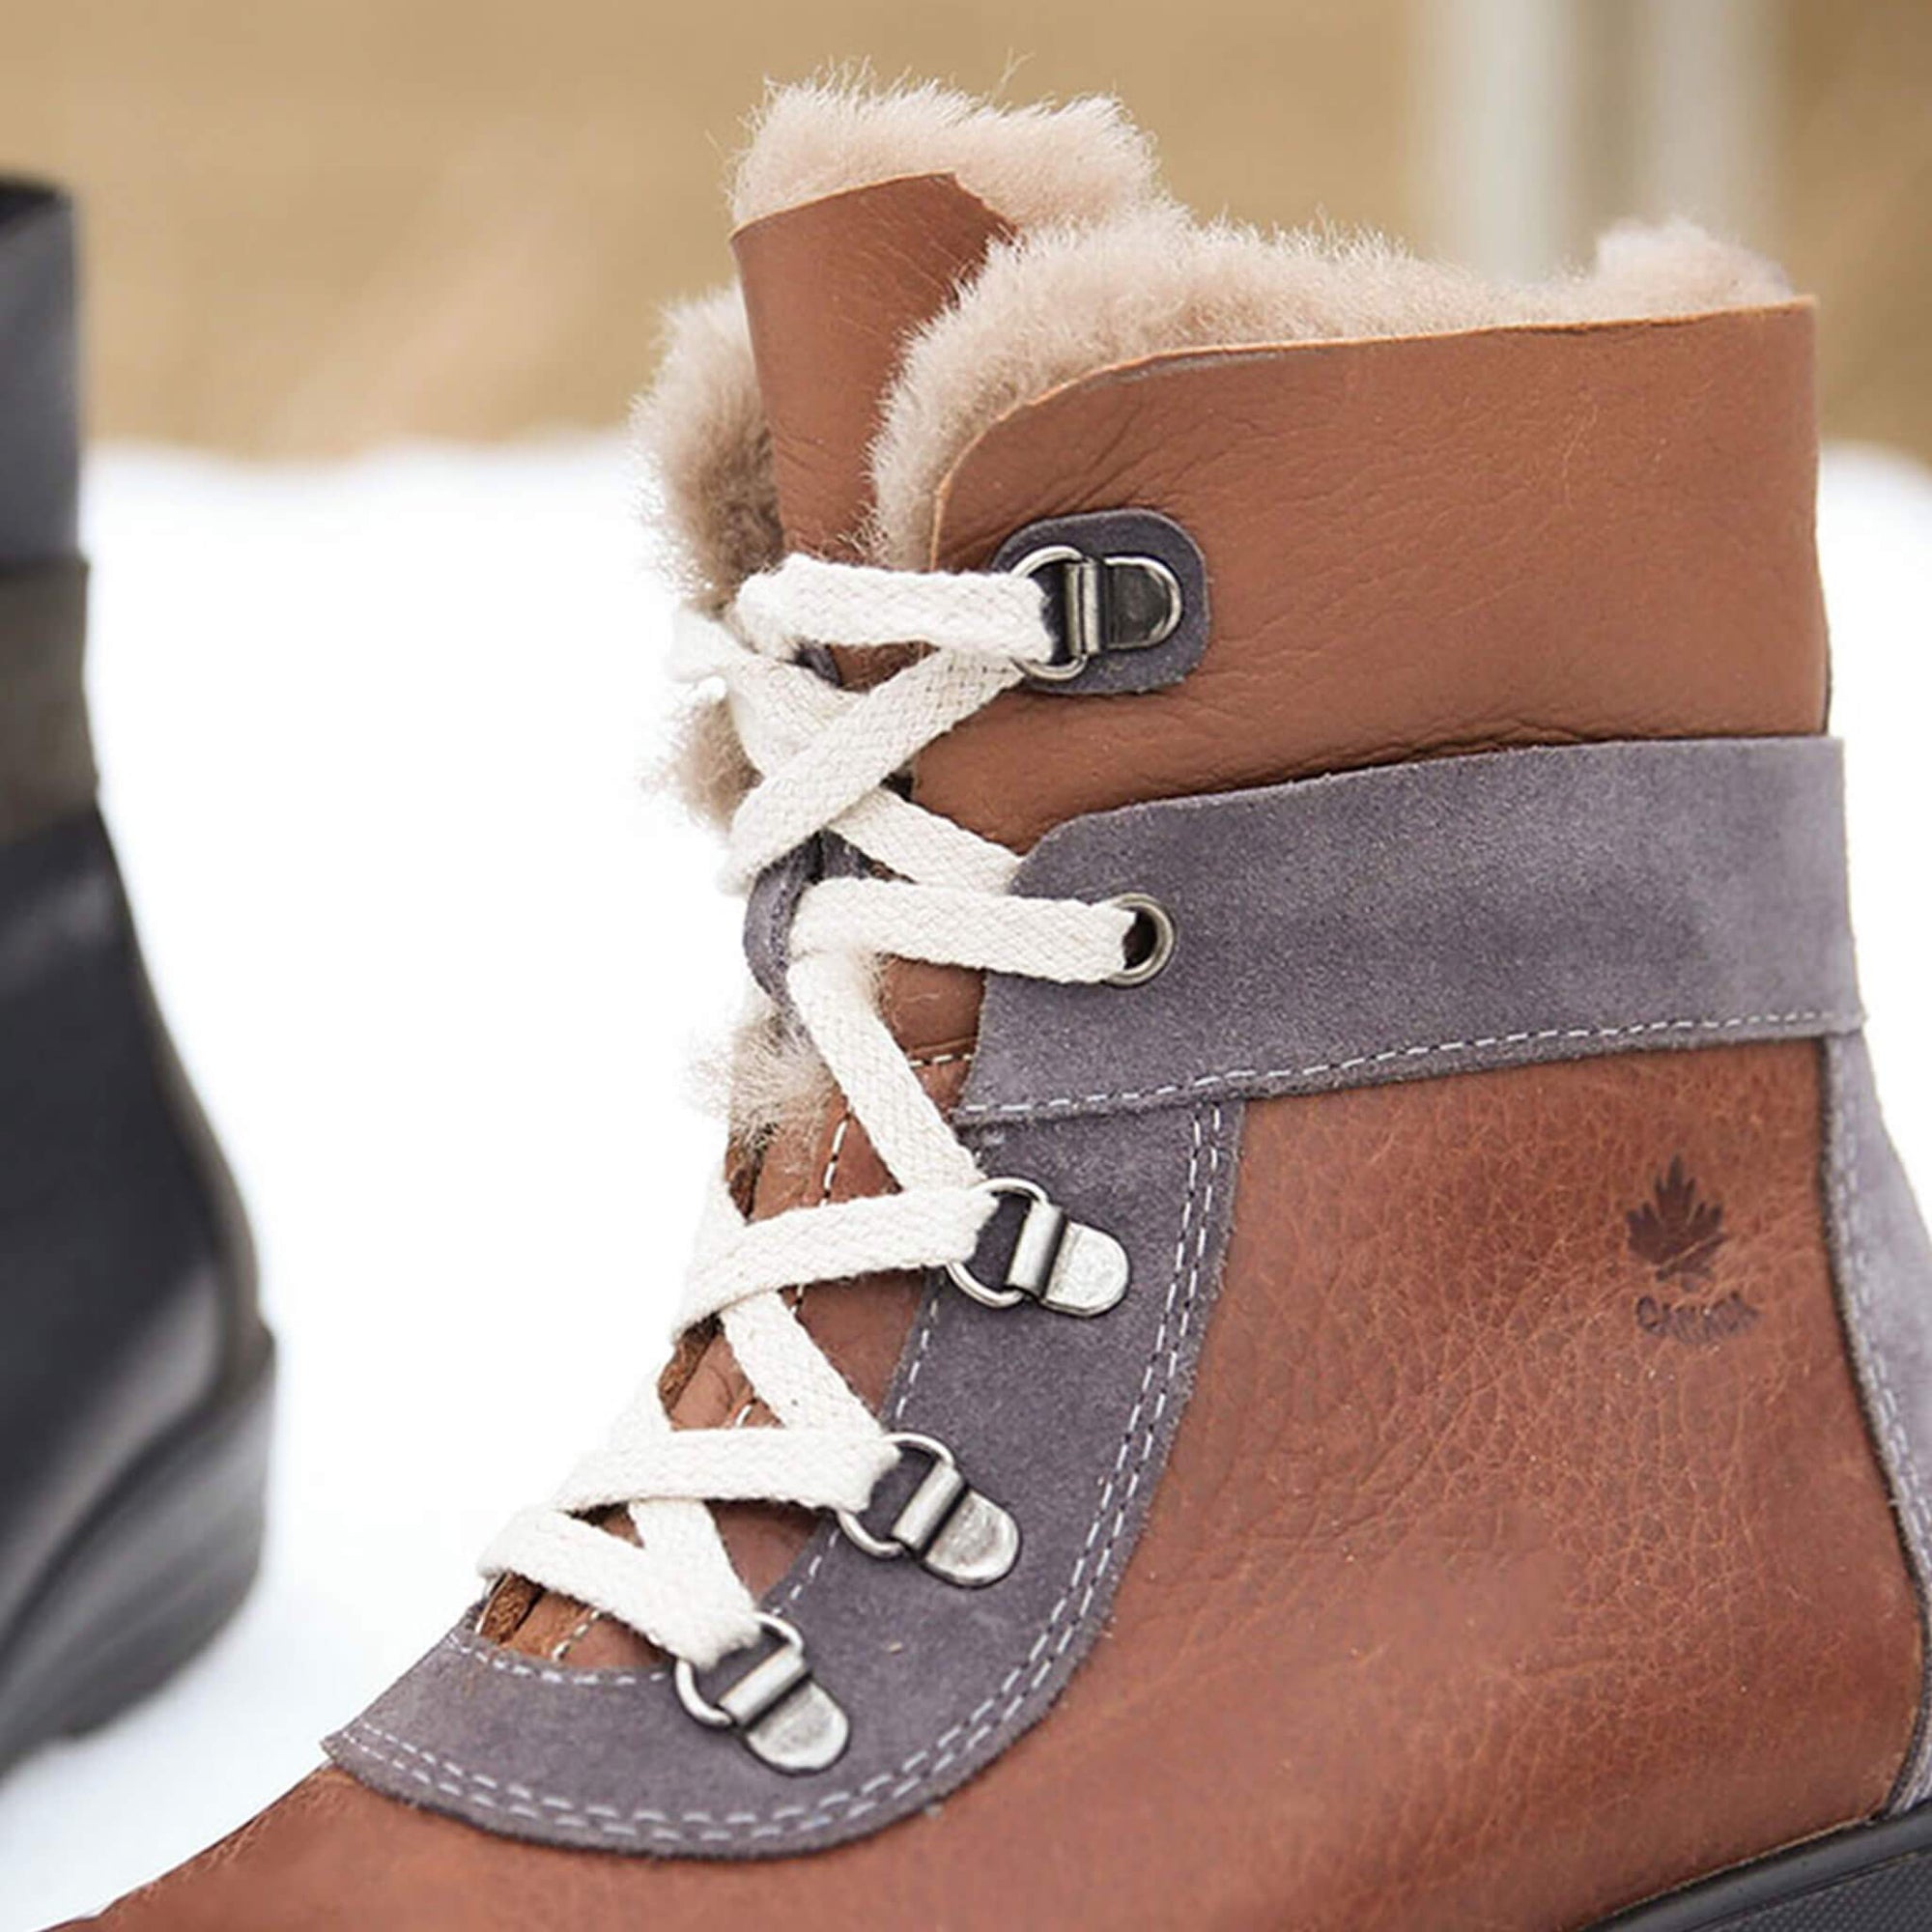 Maria winter Boot for Women - Tan-Grey